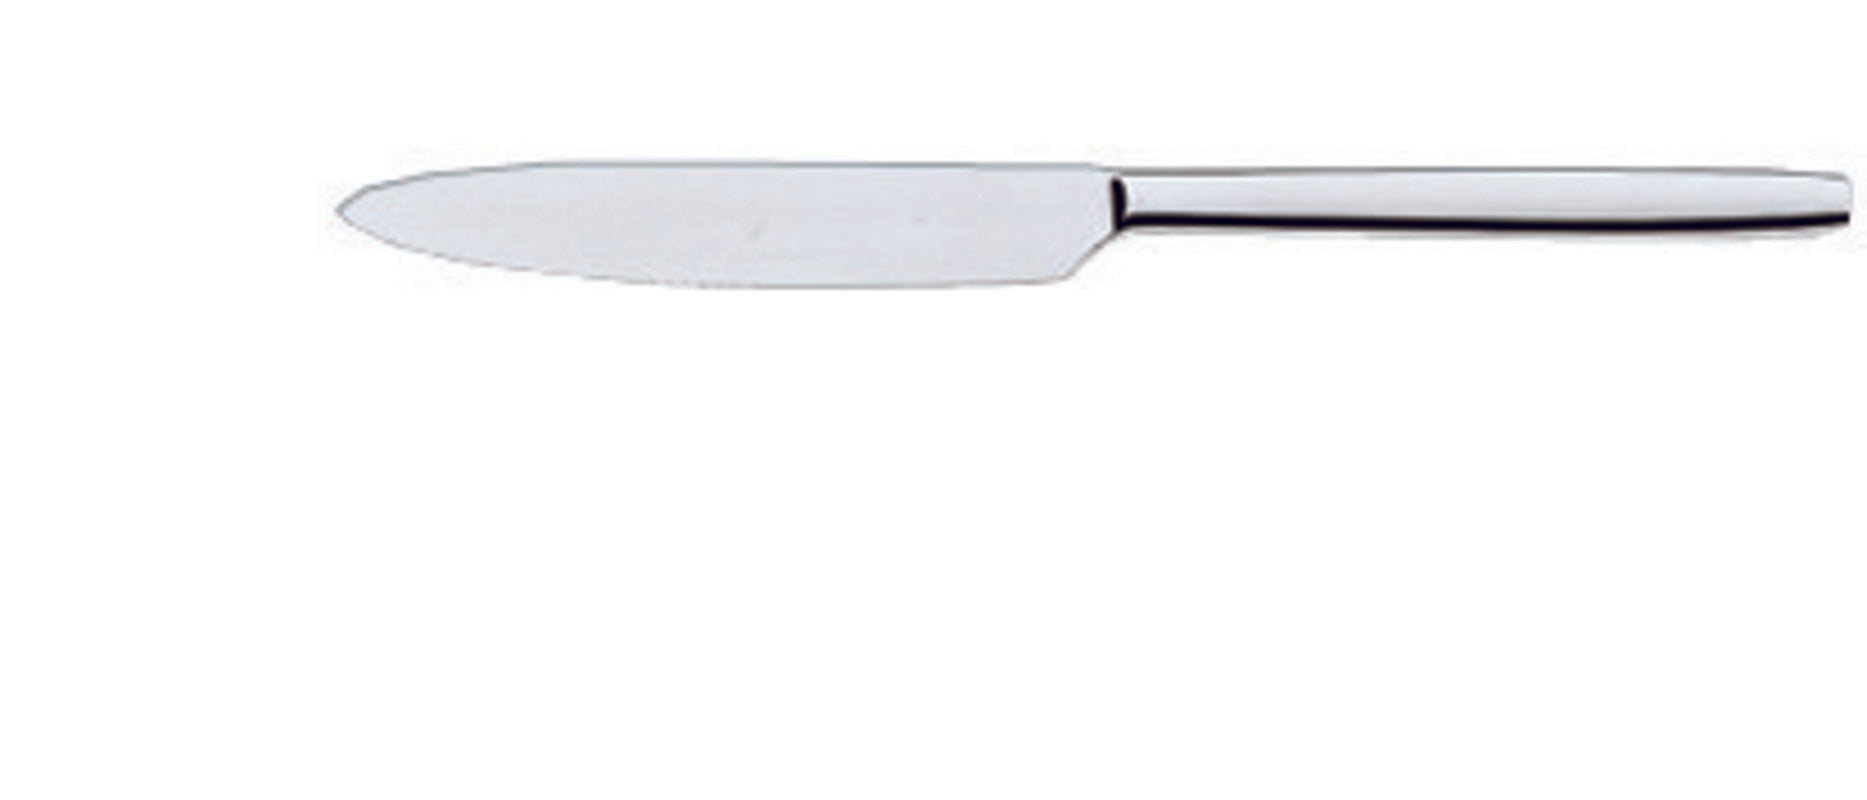 Table Knife 9